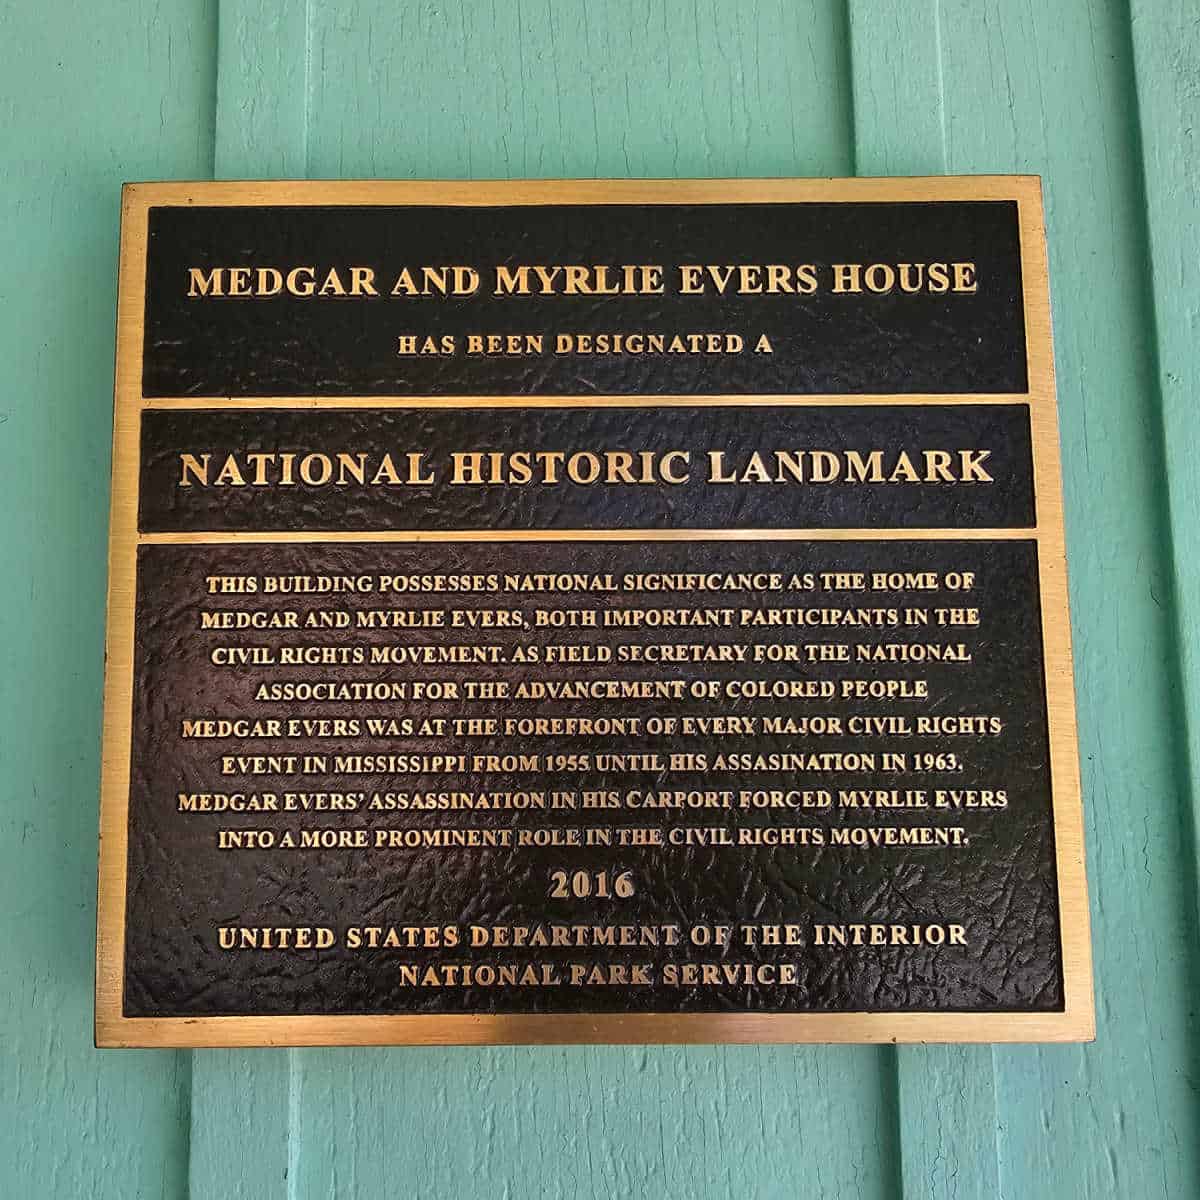 Medgar and Myrlie Evers Home designated as a National Historical Landmark